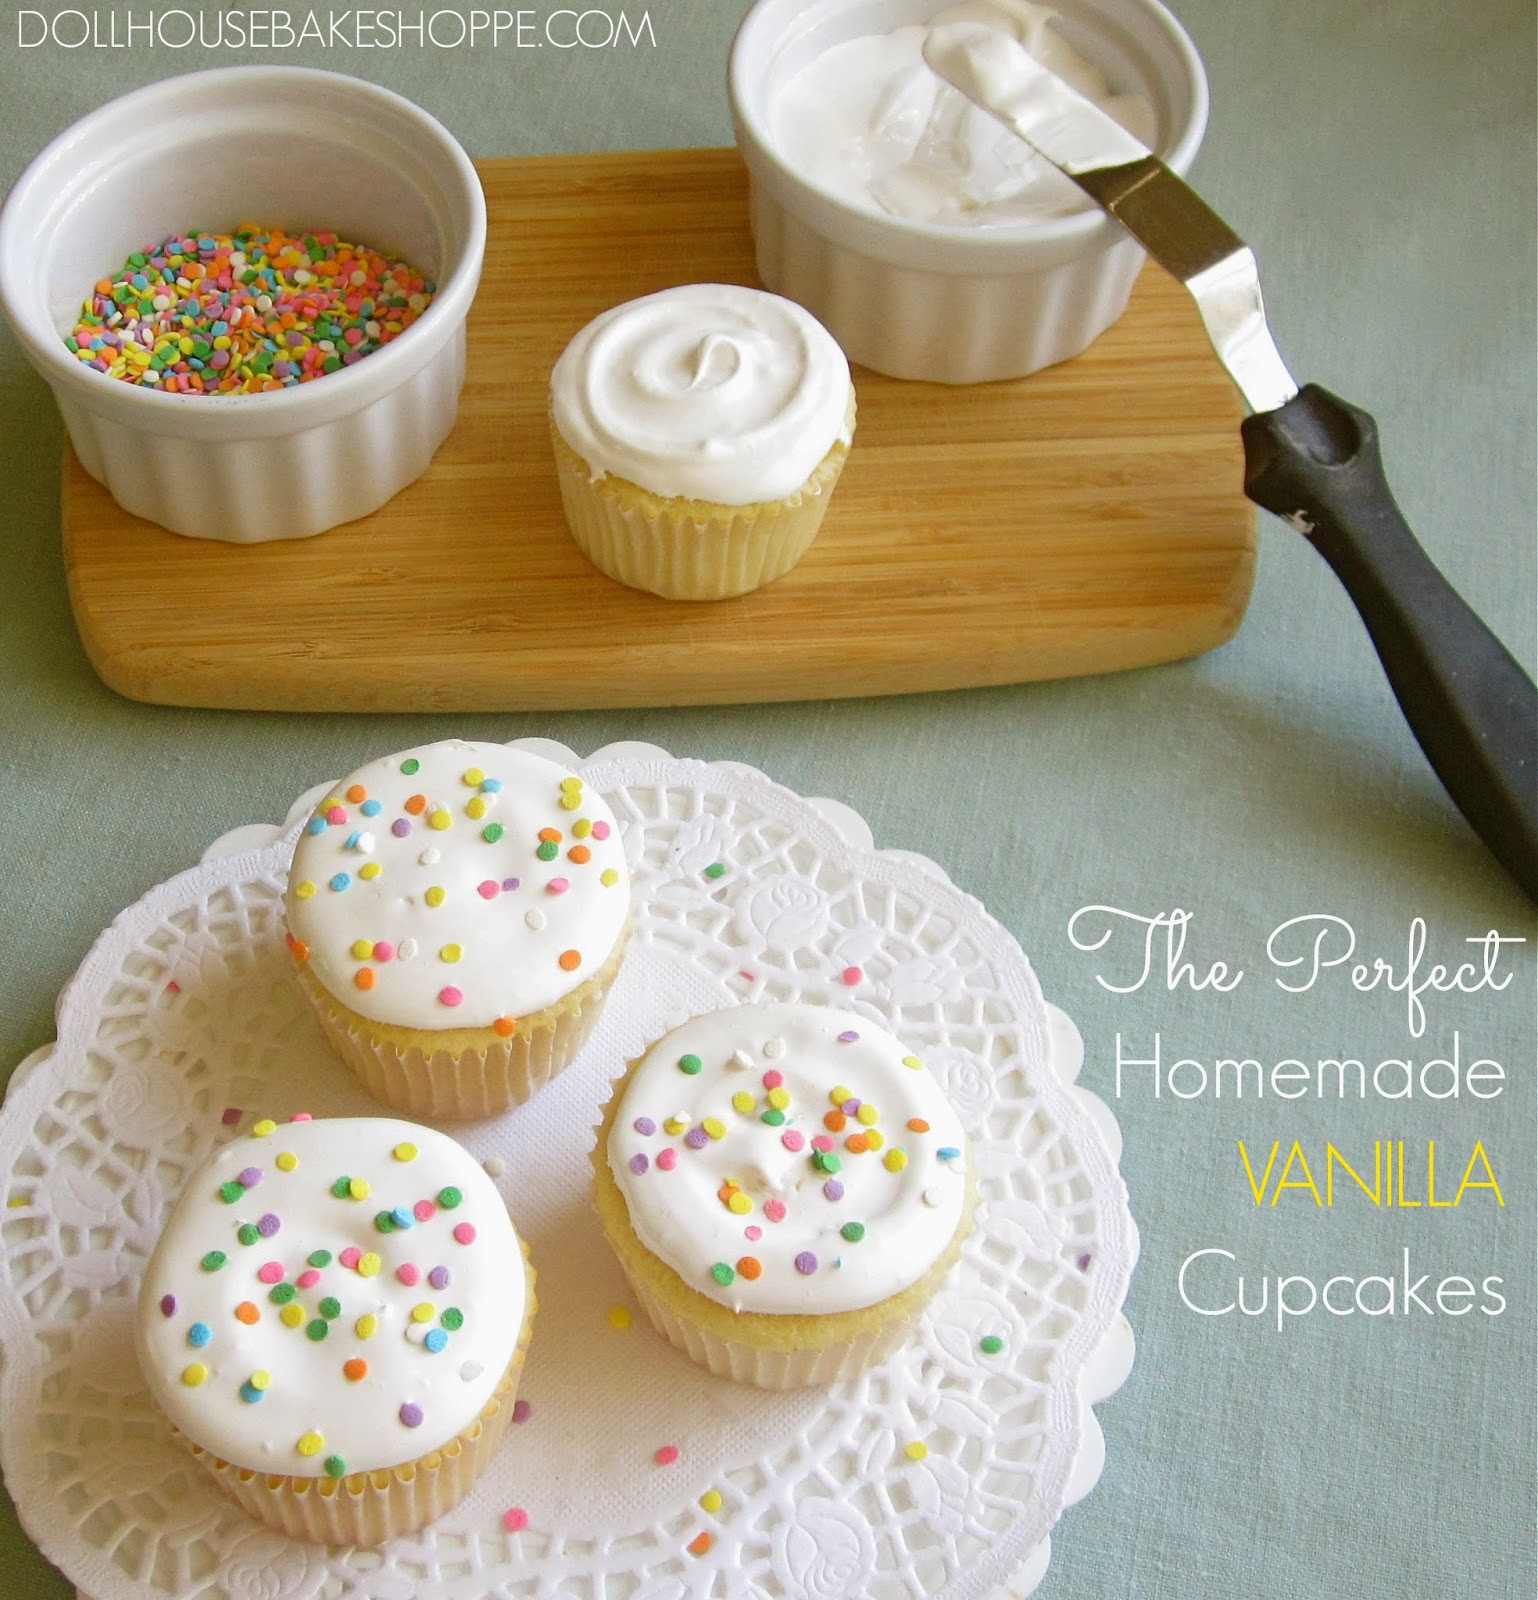 Homemade Vanilla Cupcakes
 Lindsay Ann Bakes Best Homemade Yellow Vanilla Cupcakes